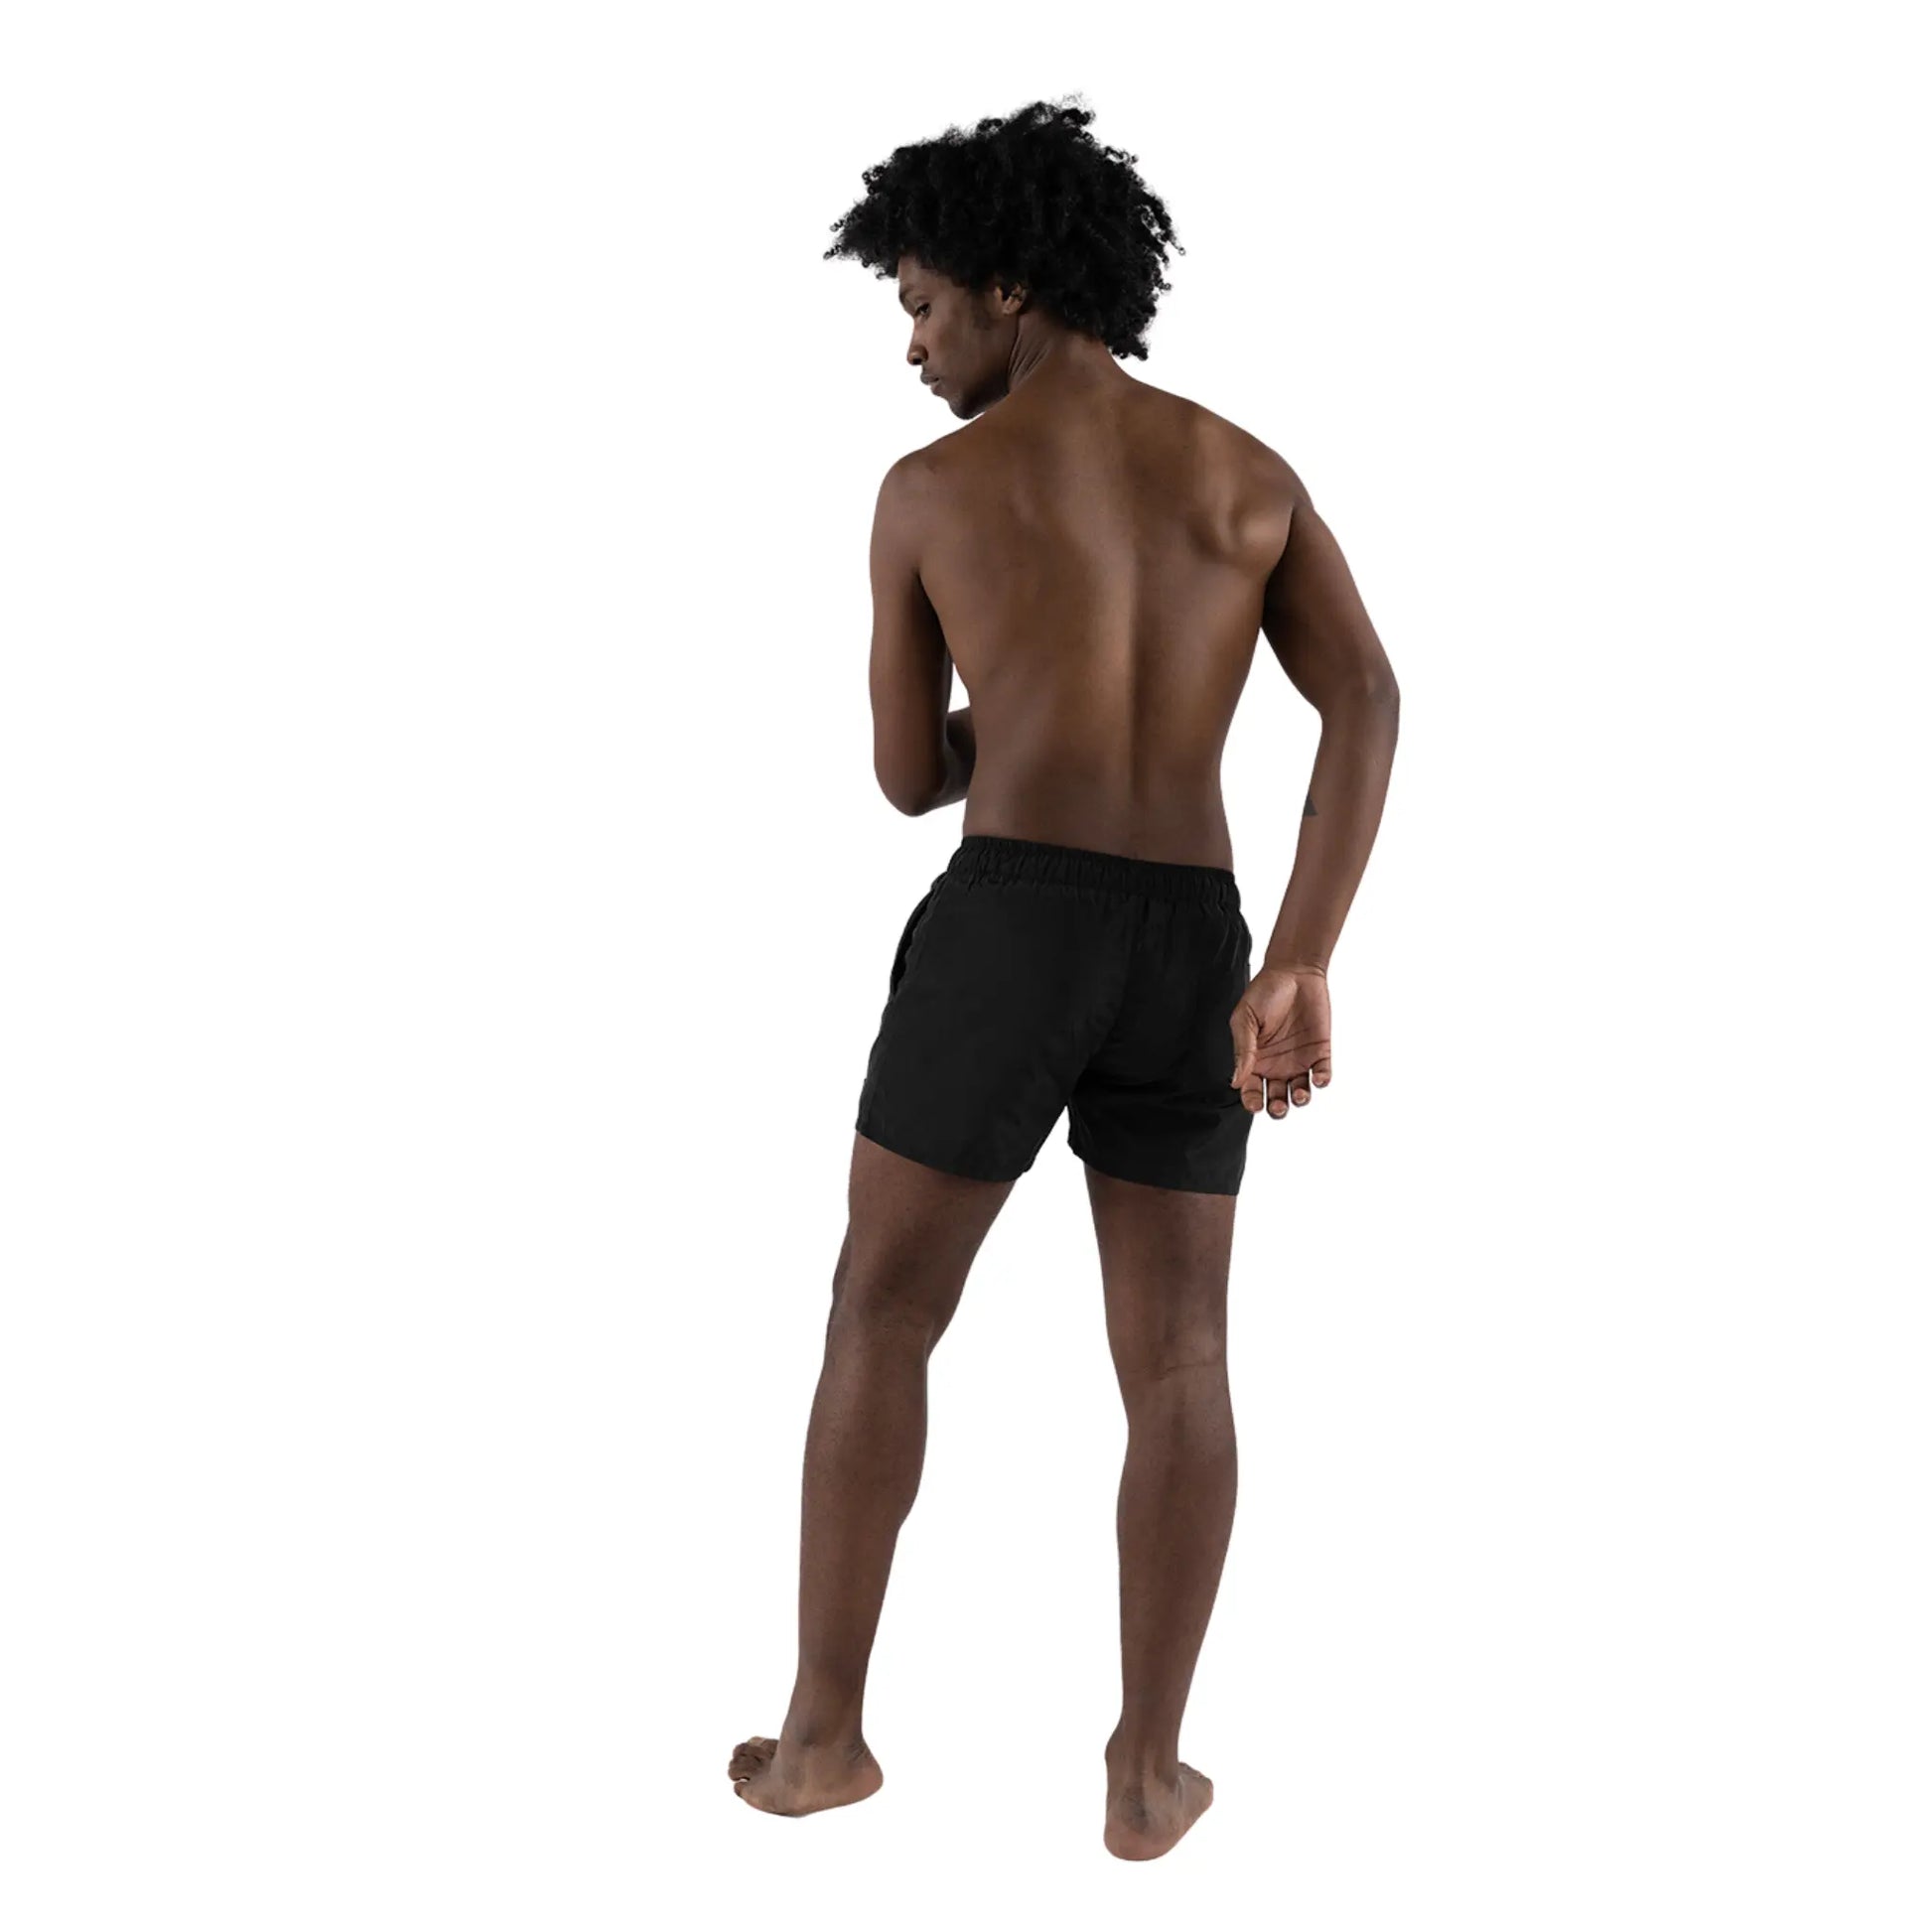 L’Homme Moderne Beachwear Black worn by black man back view